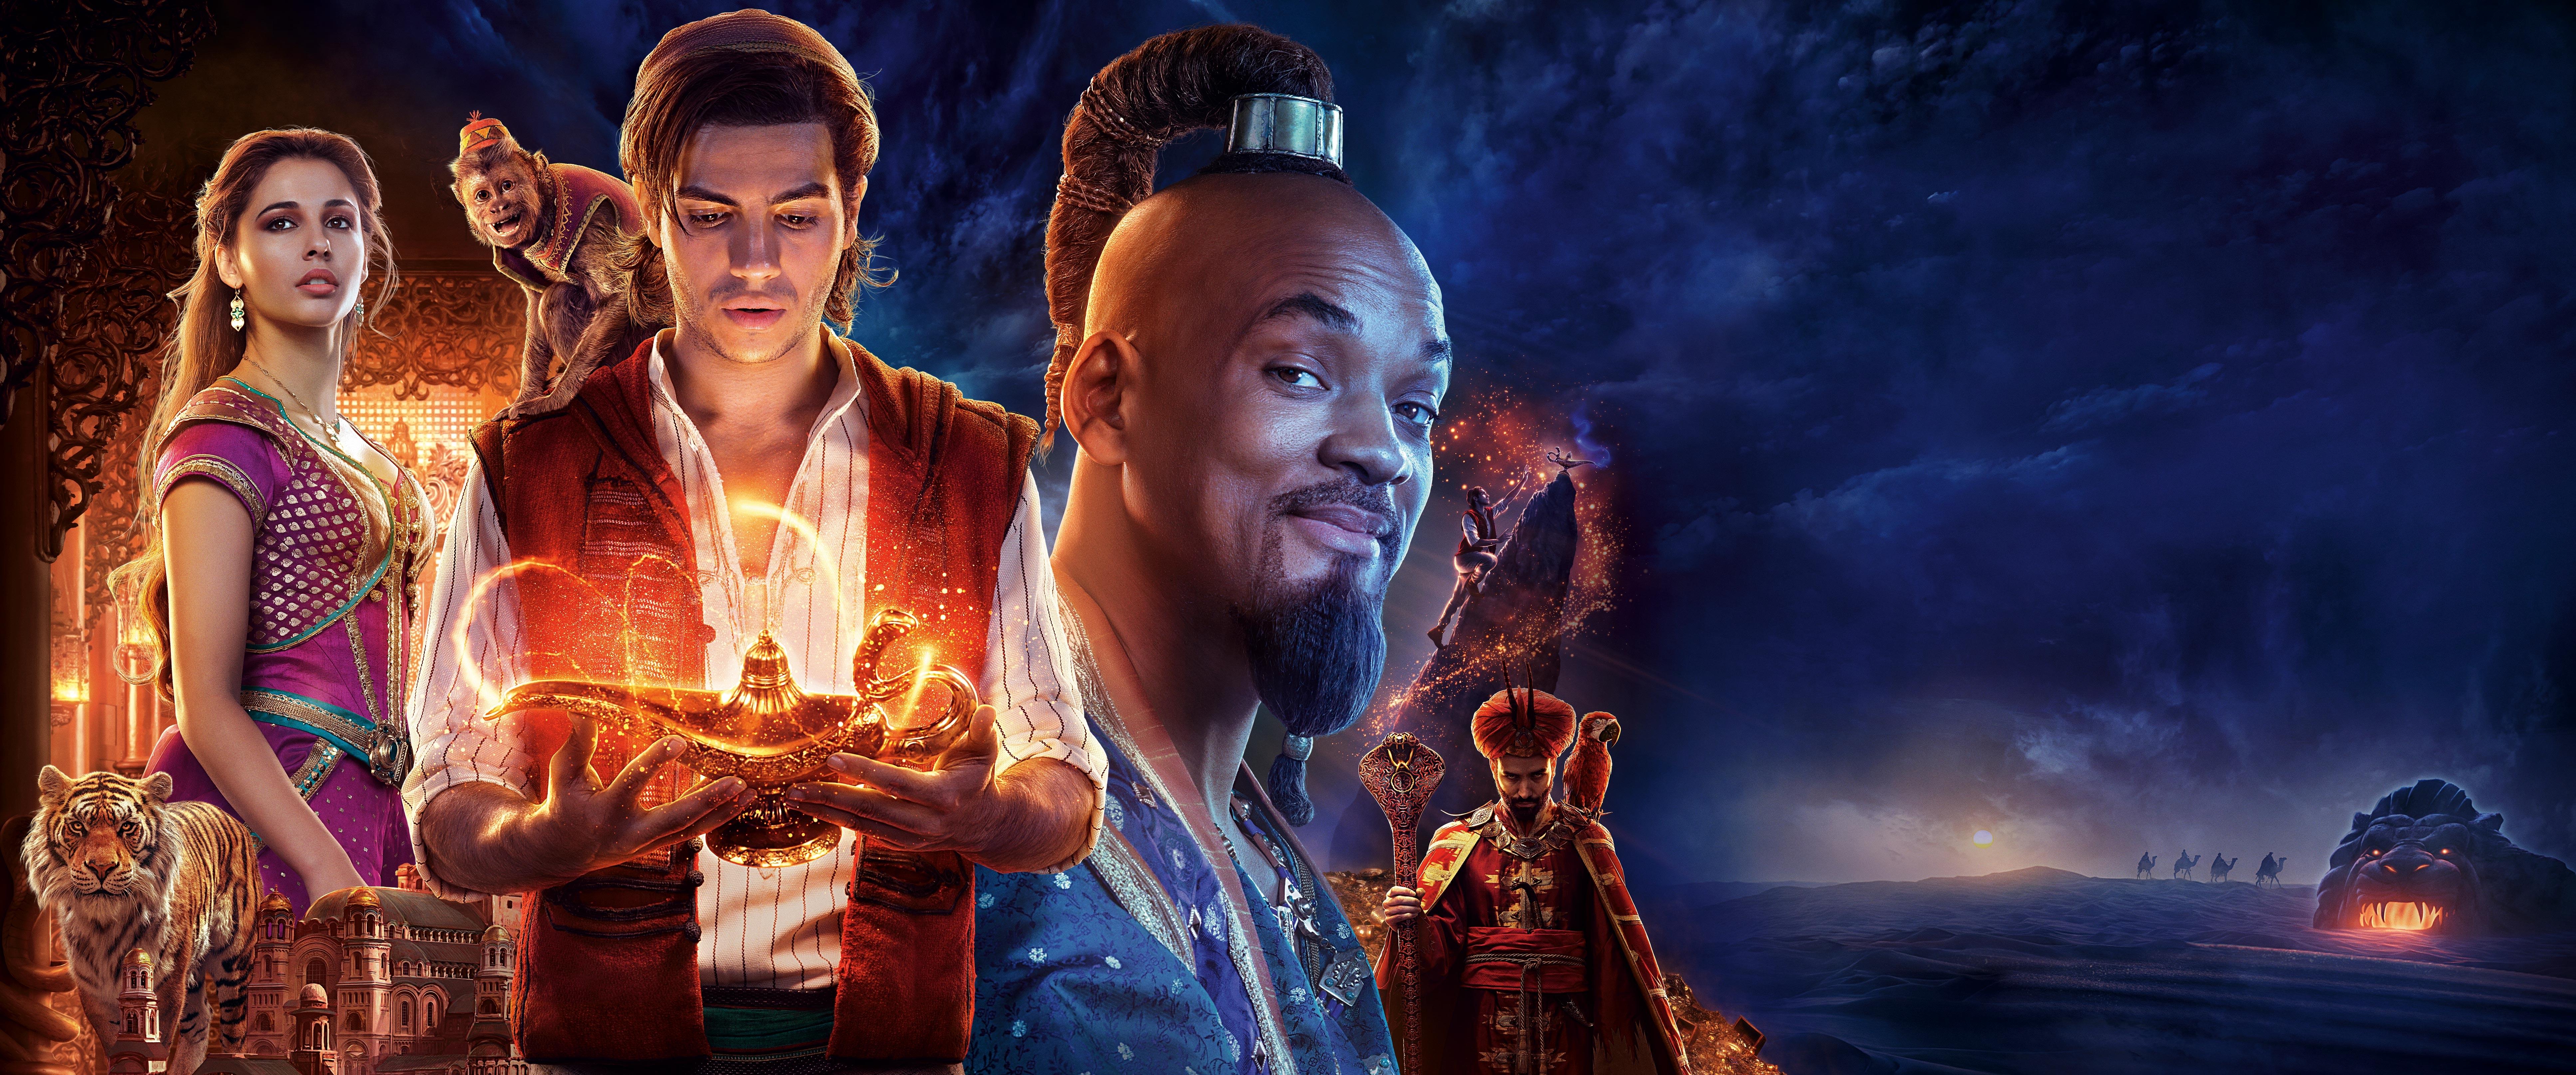 Aladdin Movie 2019 Wallpaper, HD Movies 4K Wallpaper, Image